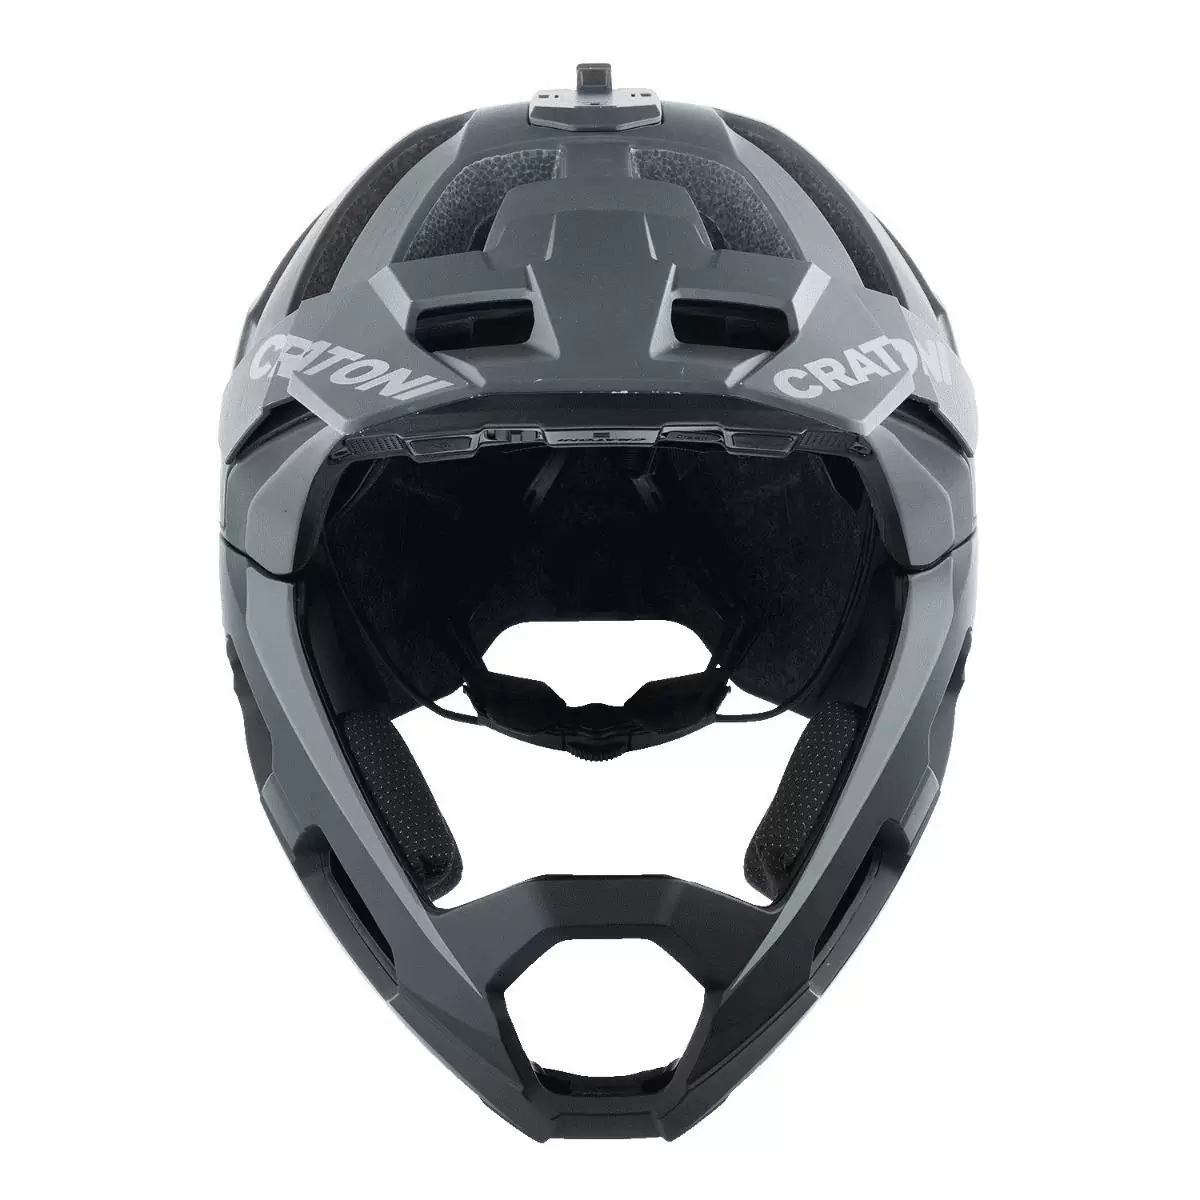 Madroc Pro Smart helmet Bluetooth black size S/M (54-58cm) #3